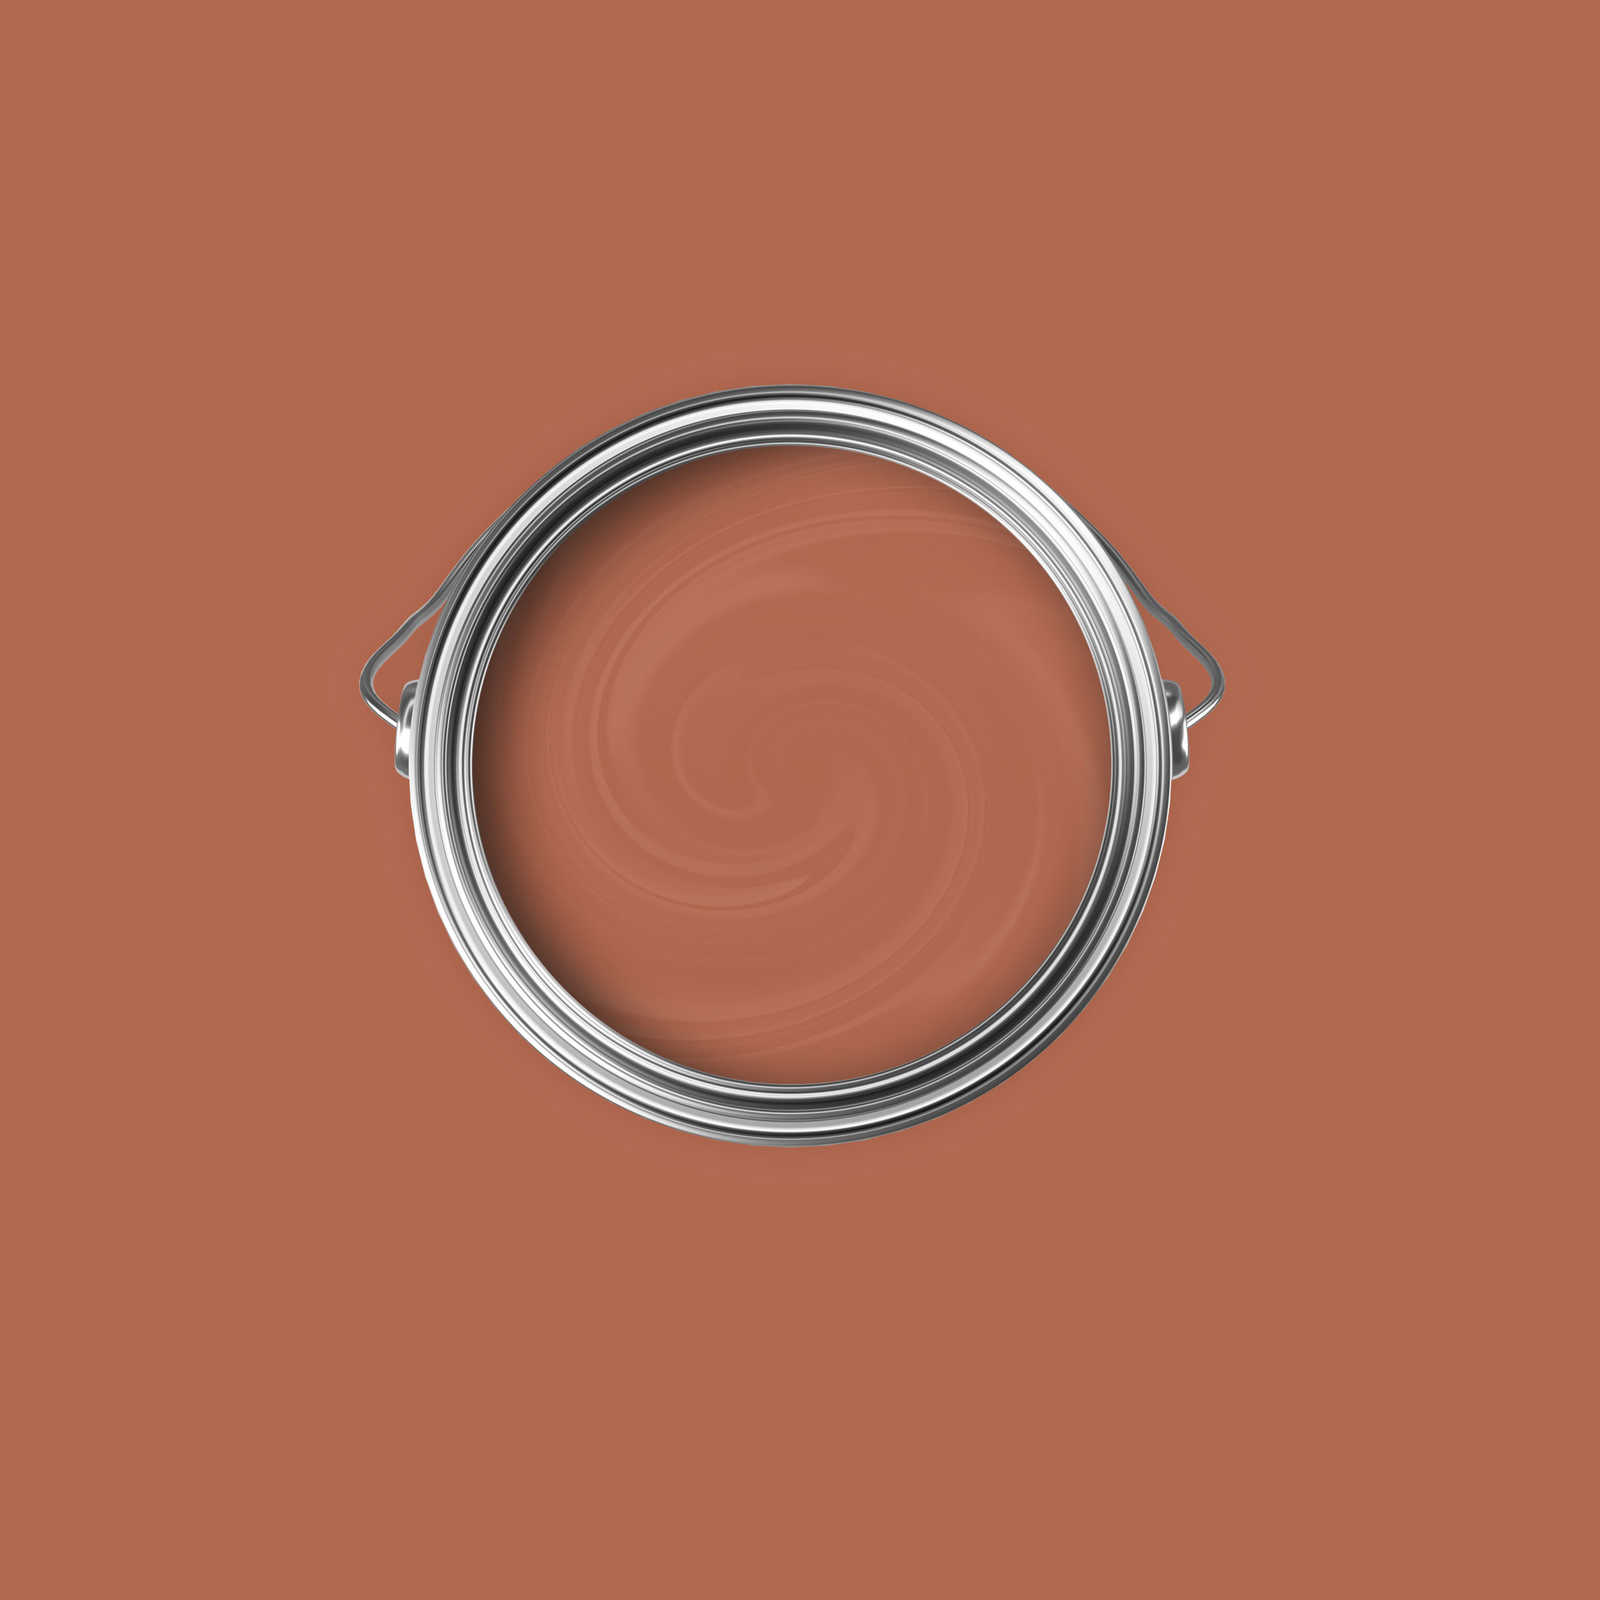             Premium Wall Paint Sensitive Terracotta »Pretty Peach« NW908 – 2.5 litre
        